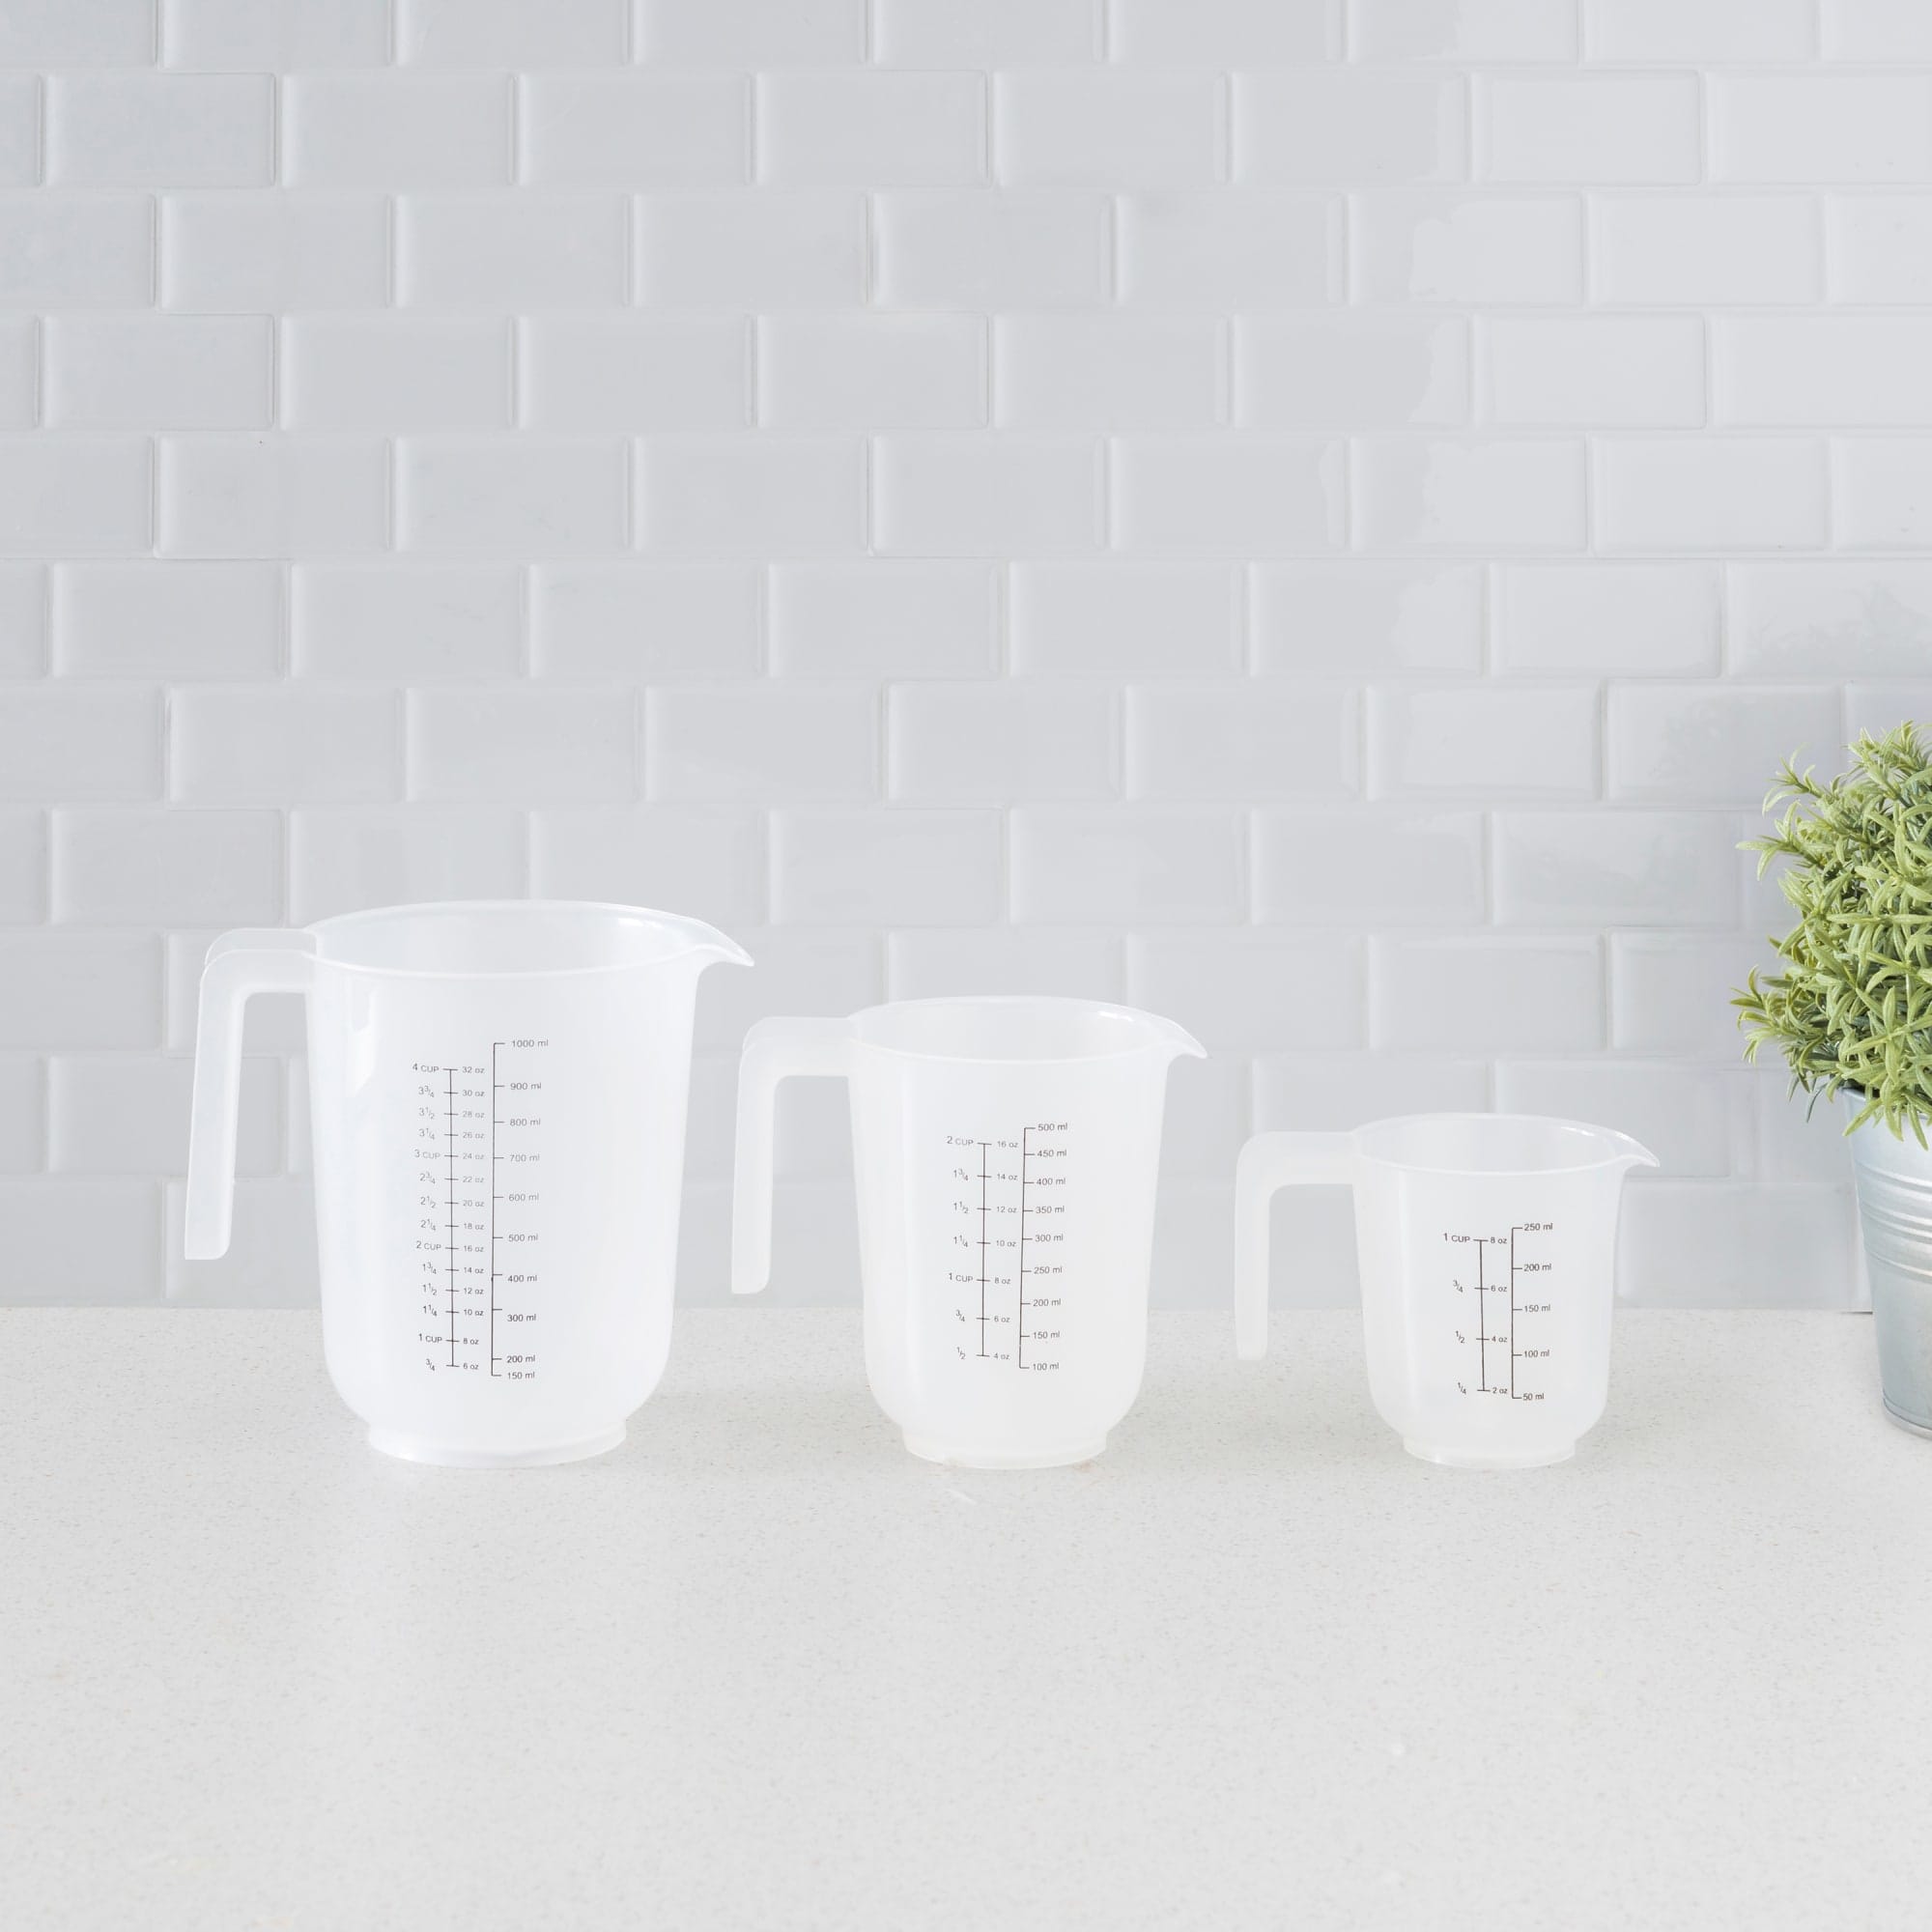 1 oz. (30 ml) & 3 oz. (100 ml) Beakers - Measuring Cups